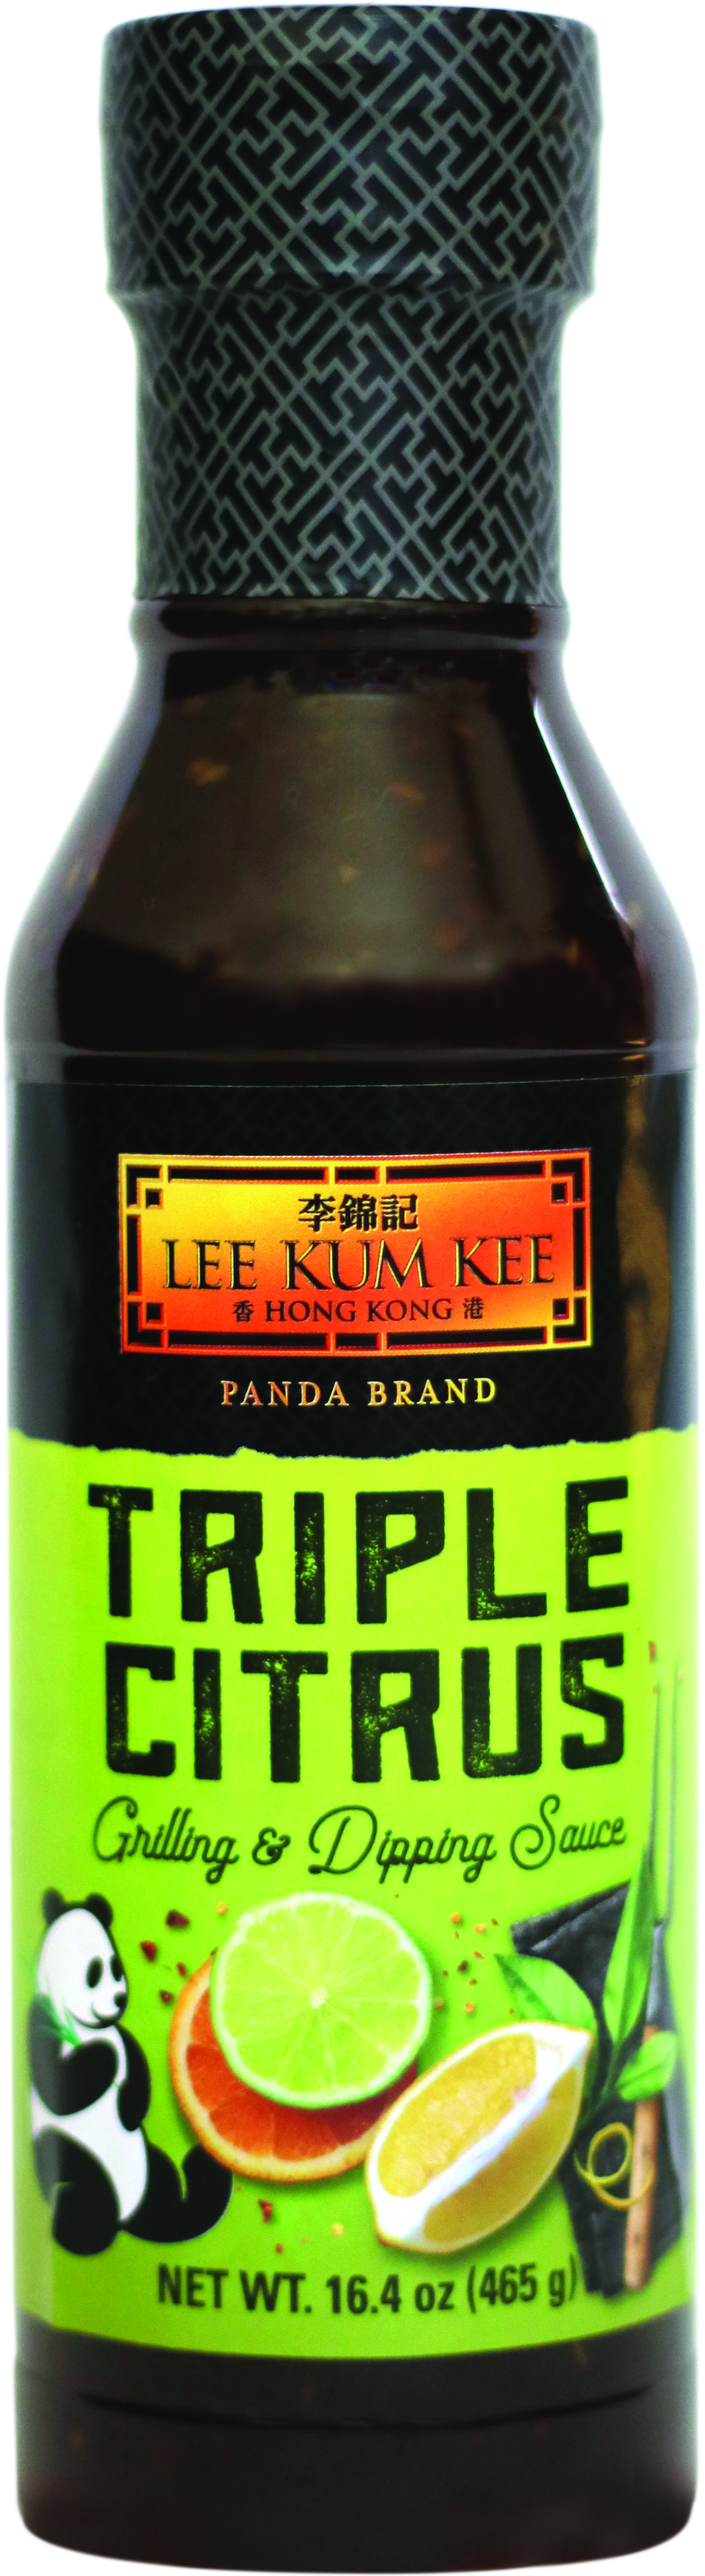 Panda Brand Triple Citrus Grilling & Dipping Sauce - 16.4 oz